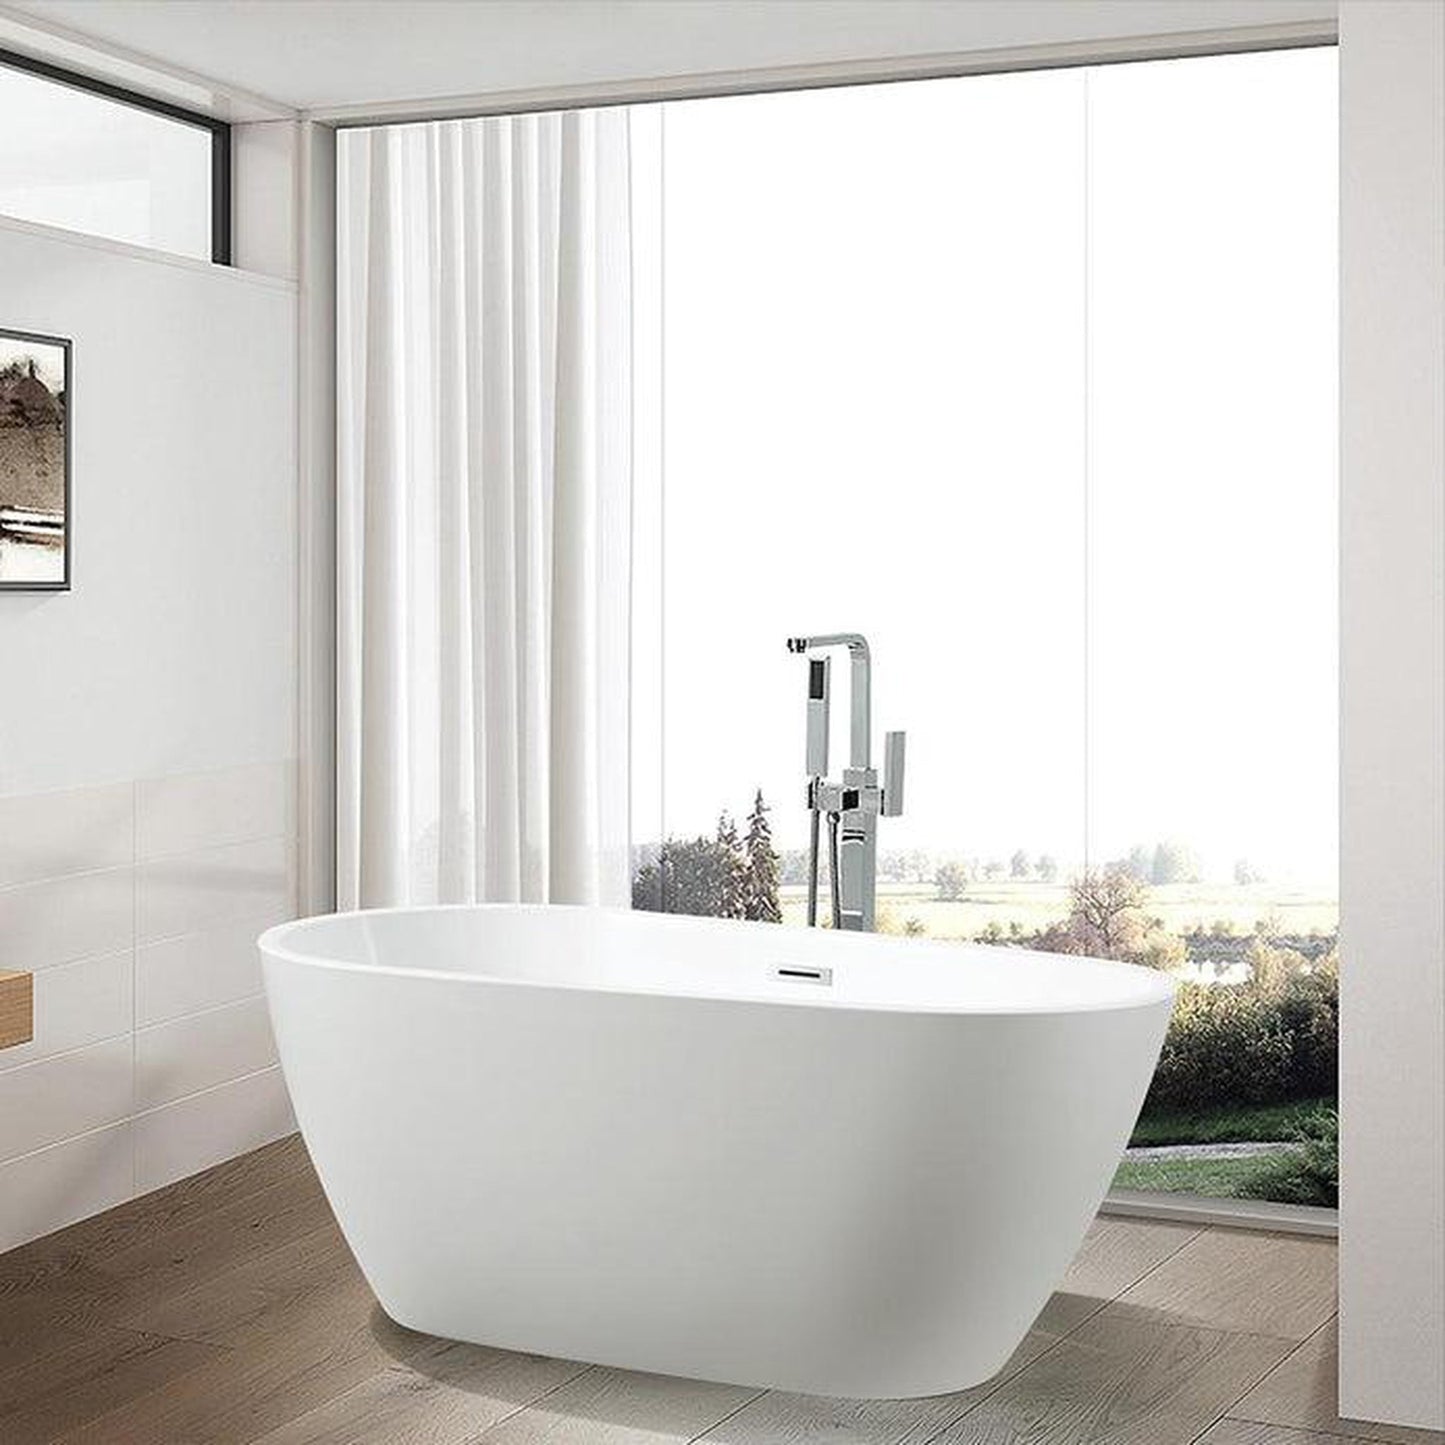 Vanity Art VA6515 59" White Acrylic Freestanding Bathtub With Polished Chrome Pop-up Drain and Flexible Drain Hose